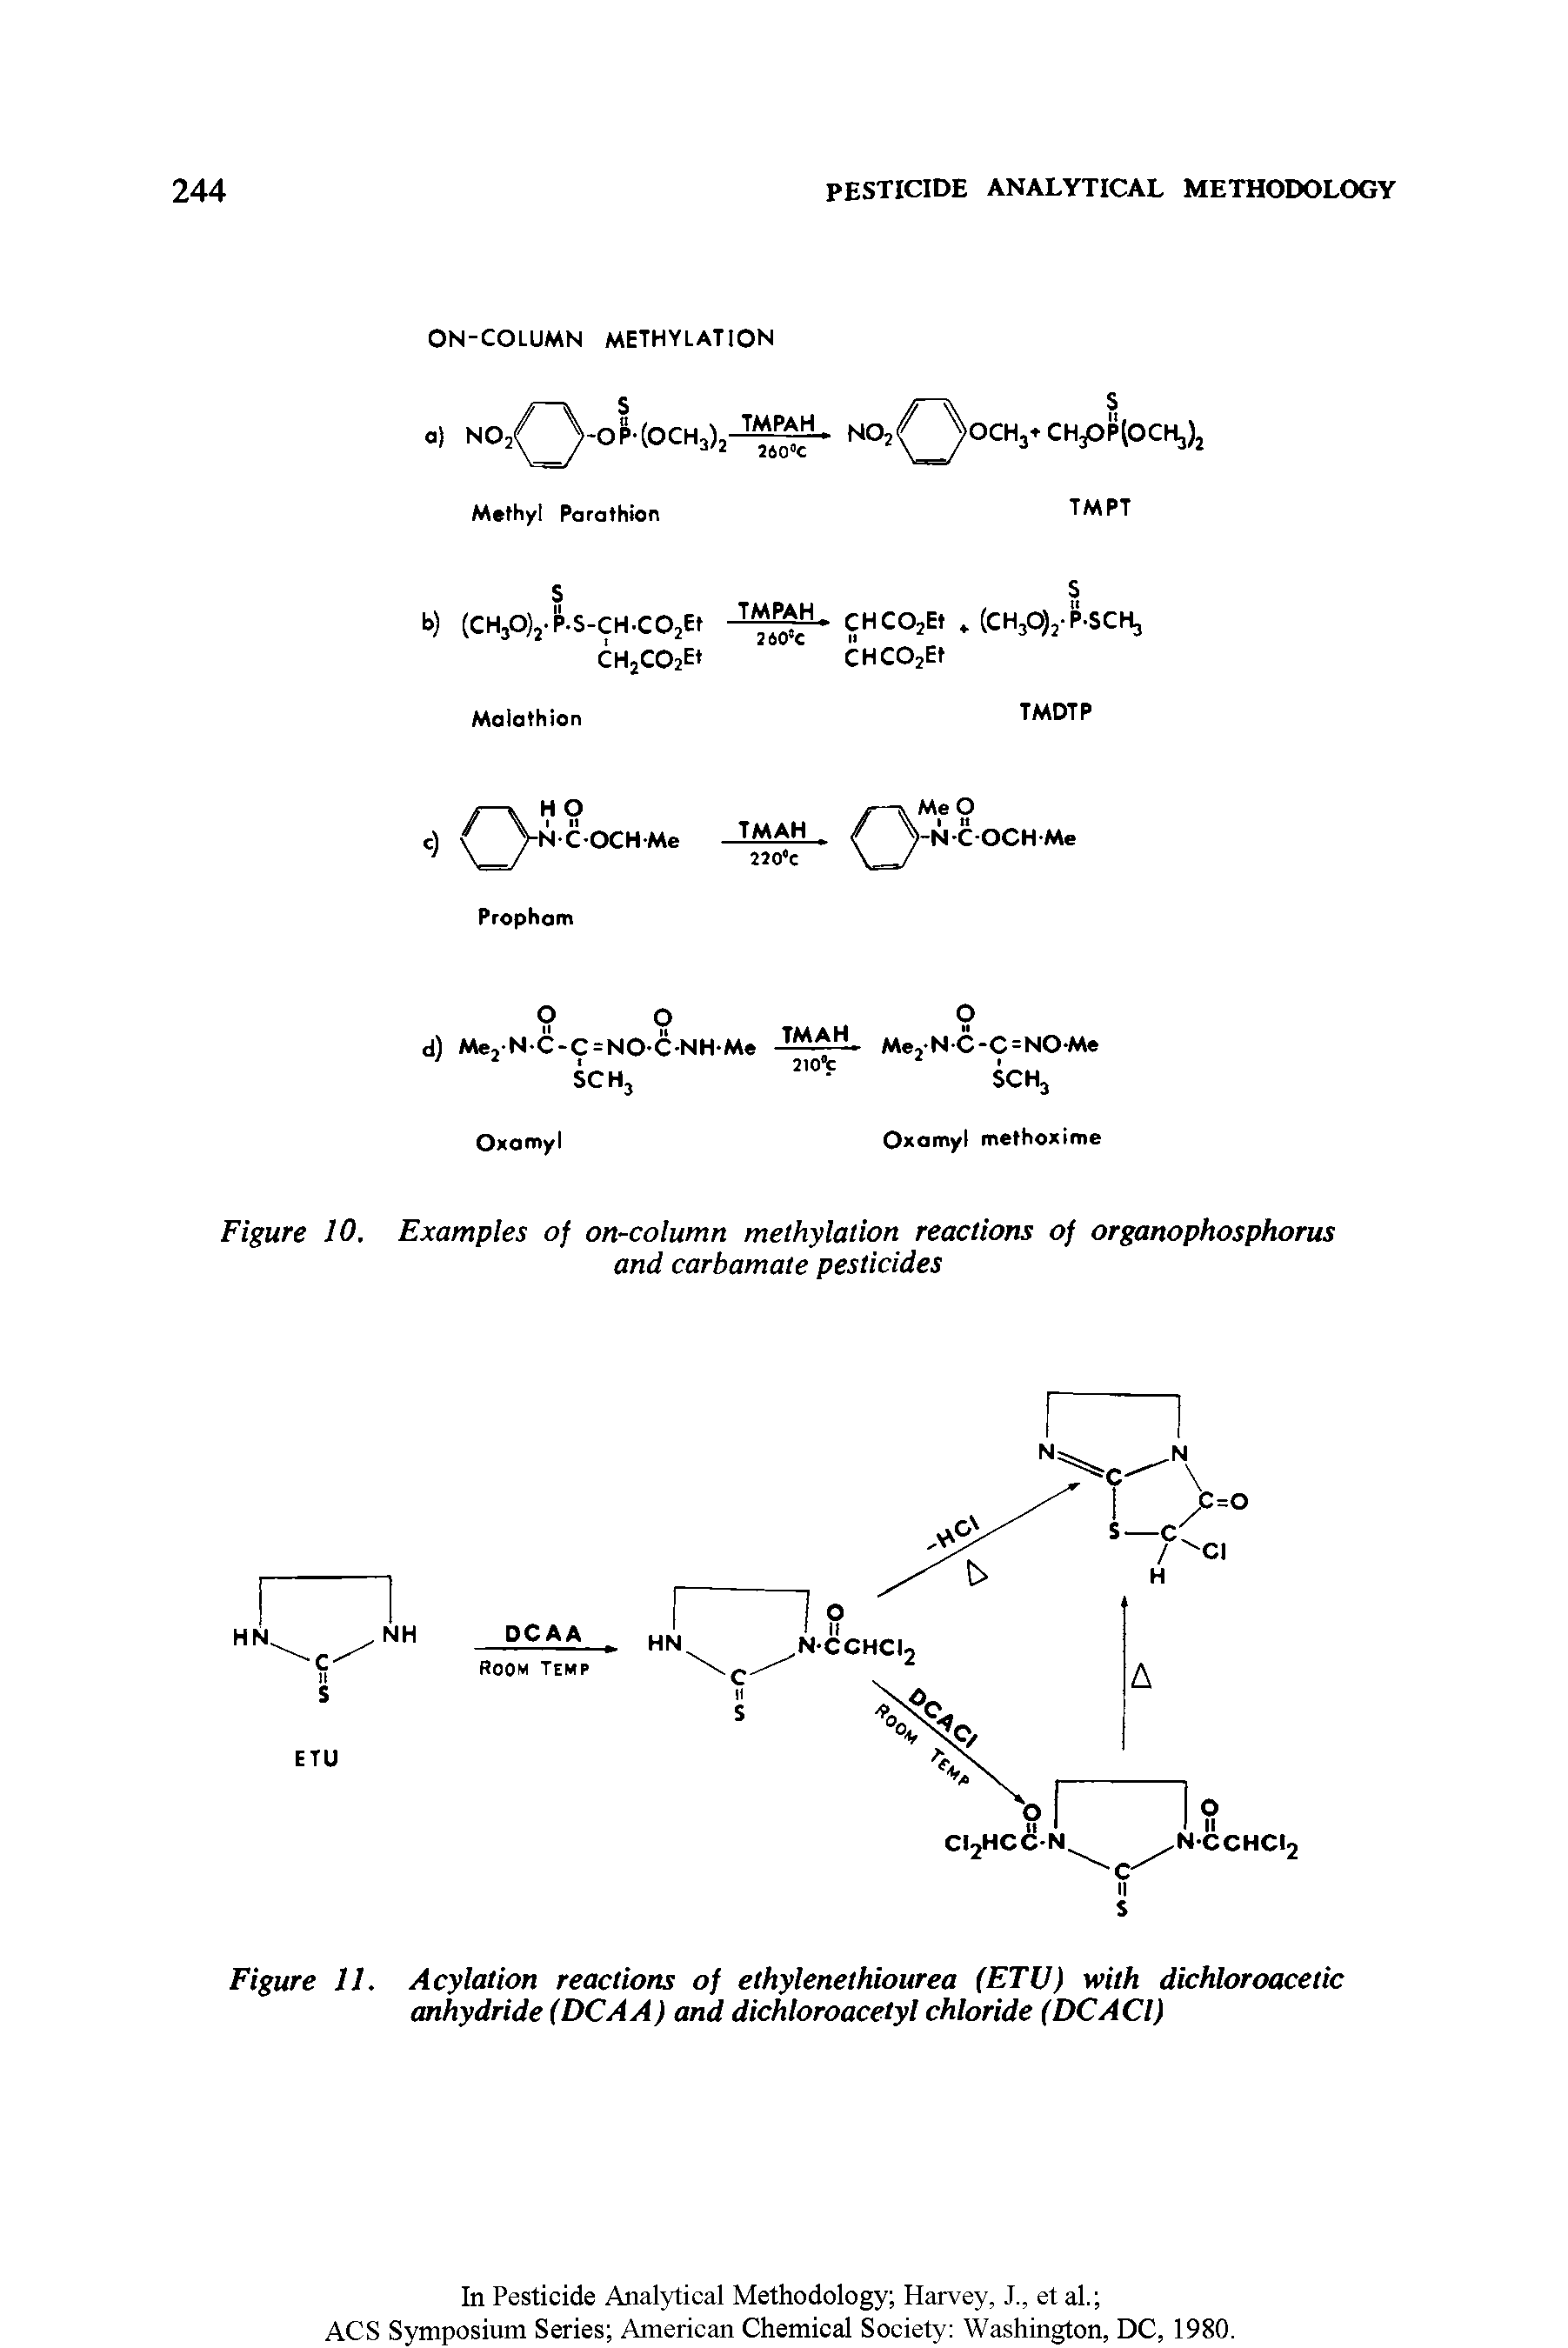 Figure 10. Examples of on-column methylation reactions of organophosphorus...